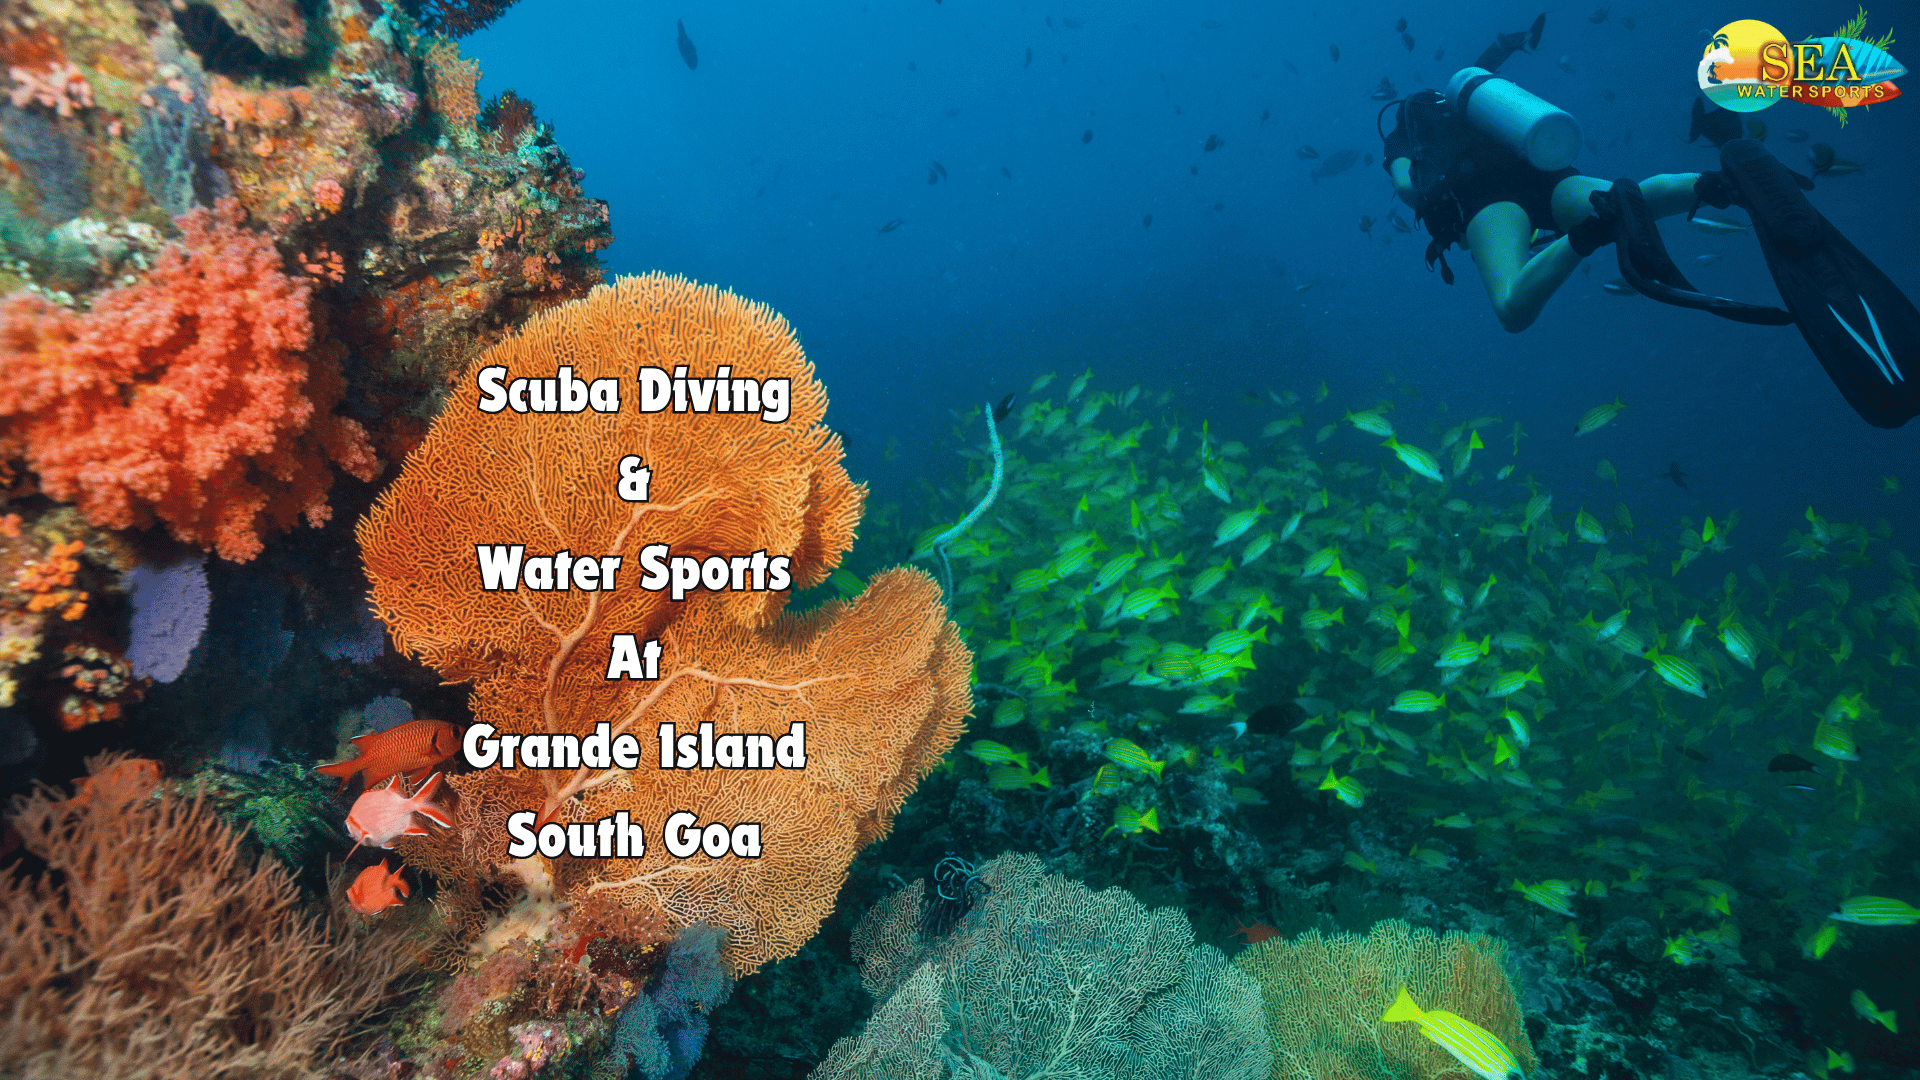 Scuba Diving & Water Sports At Grande Island, South Goa, South Goa, Goa, India